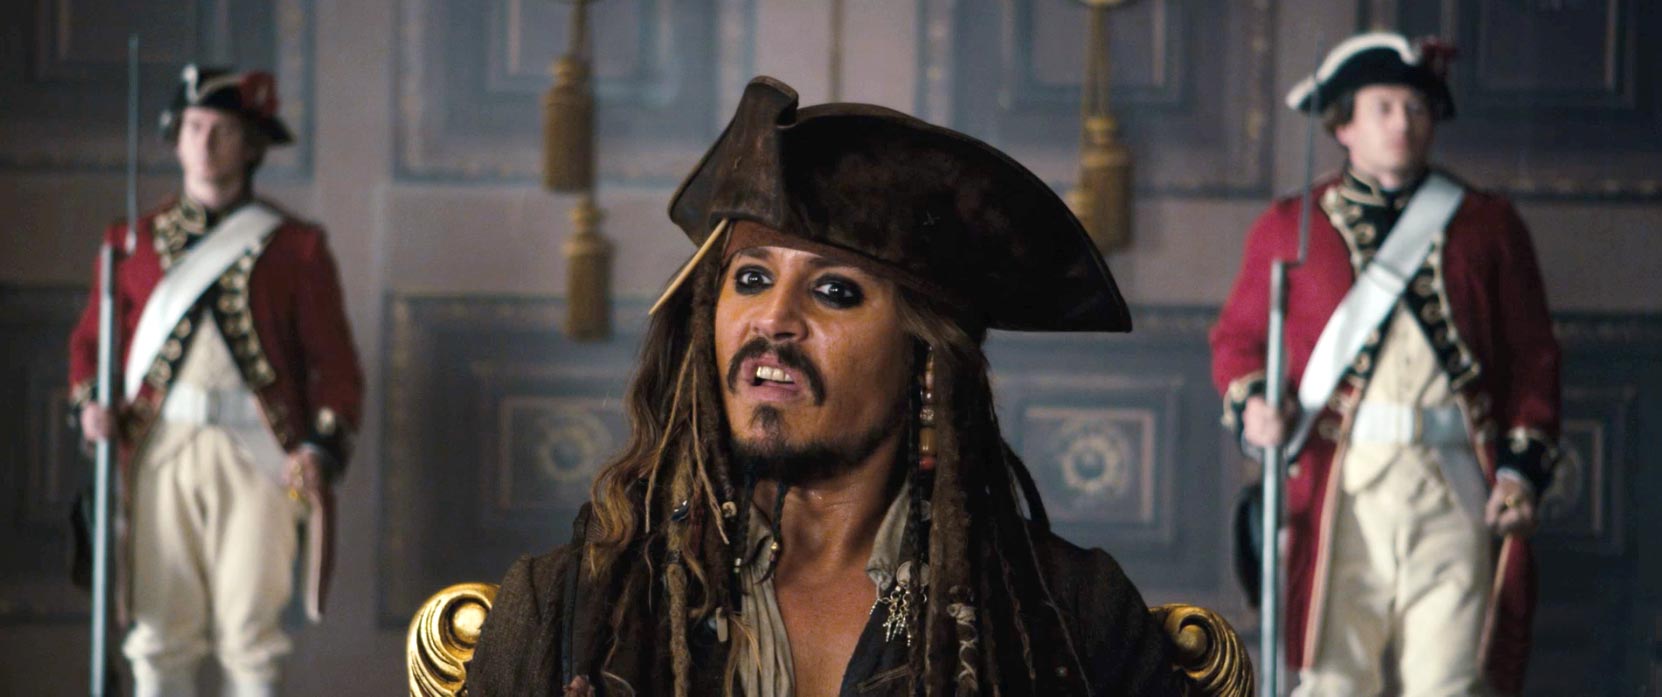 Pirates of the Caribbean 4 Trailer! FilmoFilia